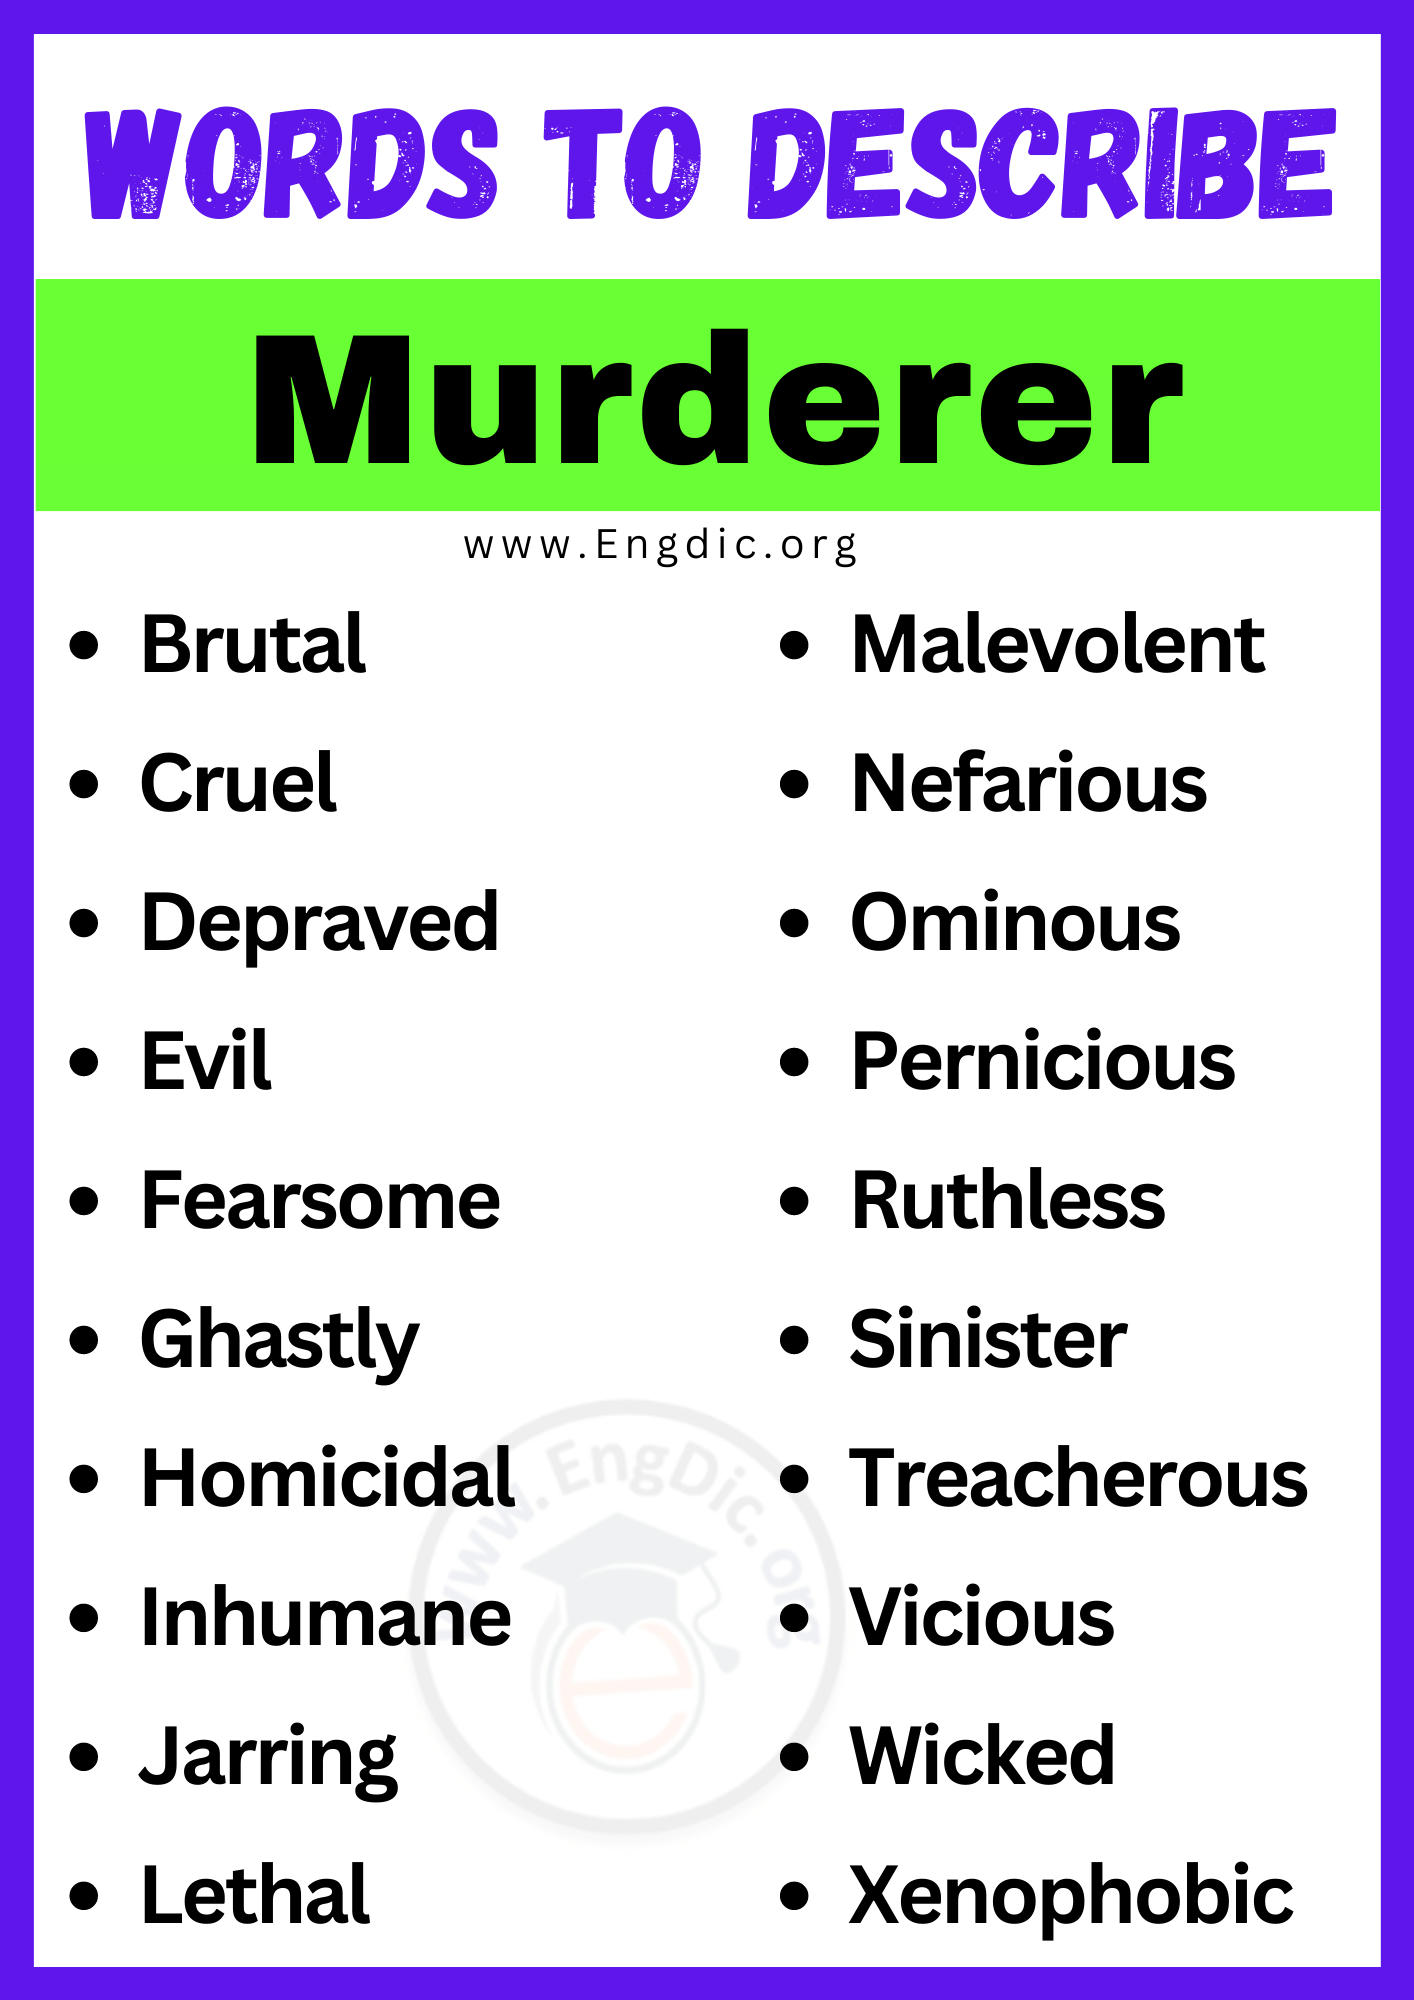 Words to Describe Murderer